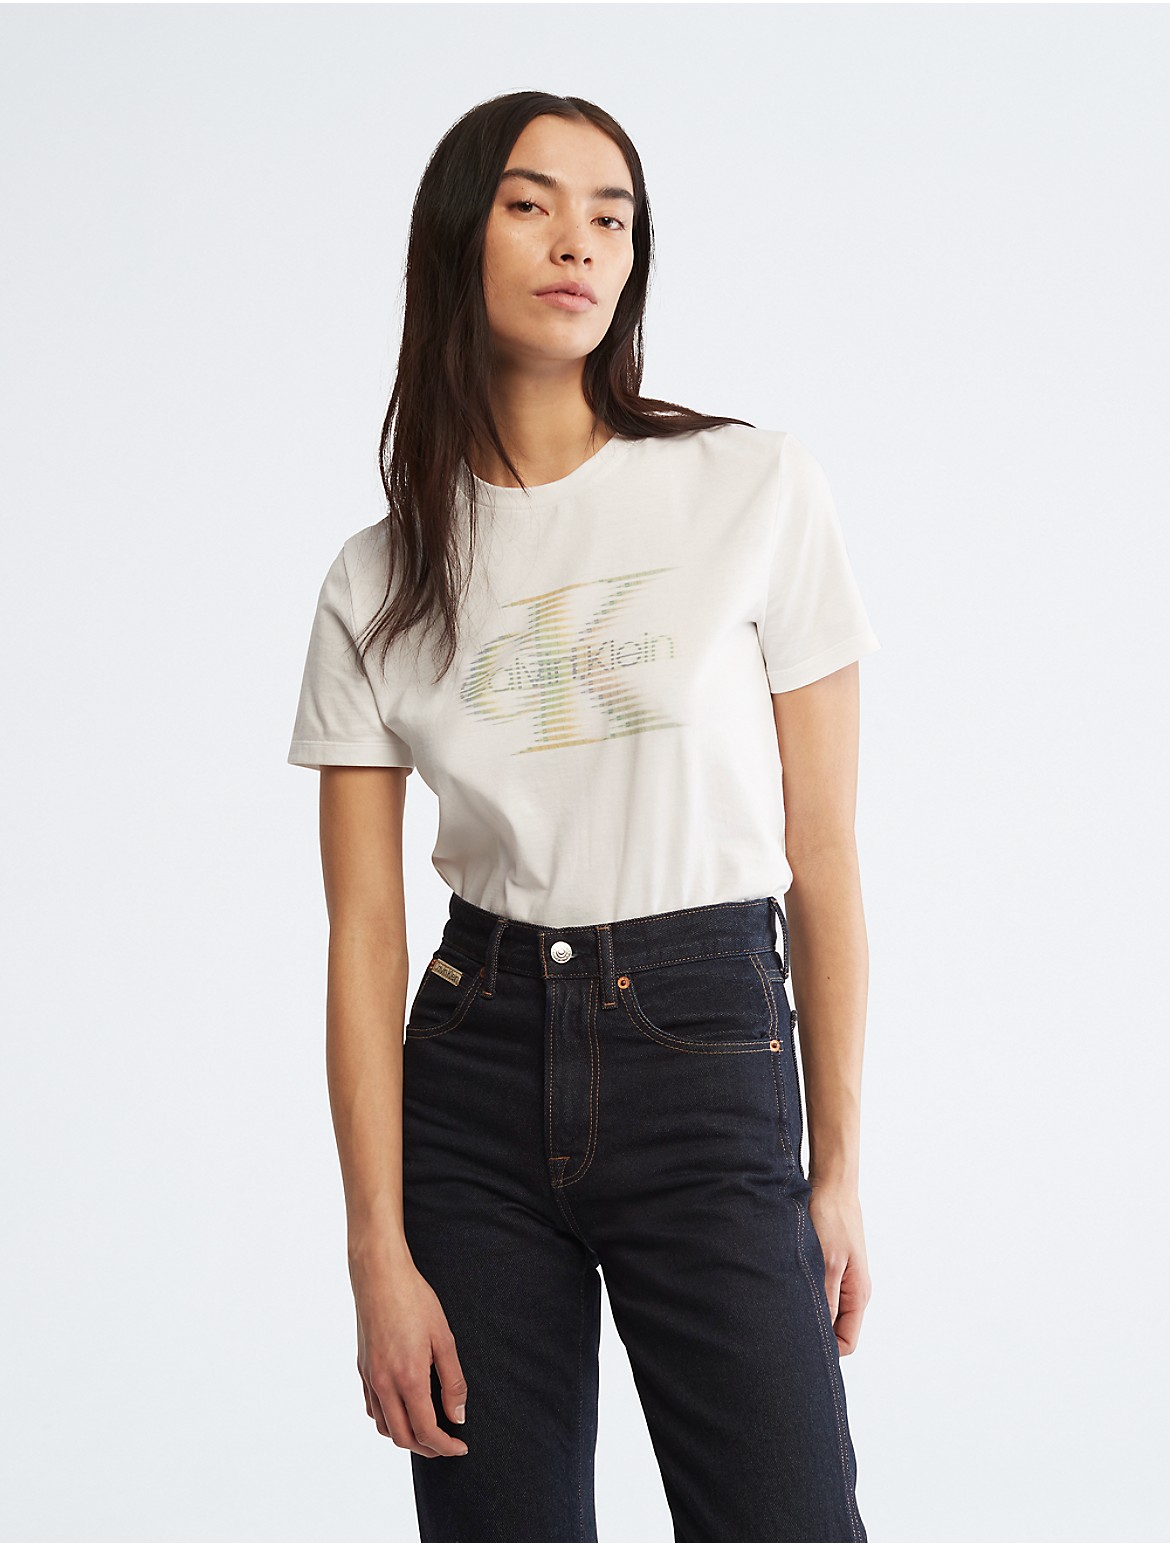 Calvin Klein Women's Reverse Print Logo T-Shirt - White - S